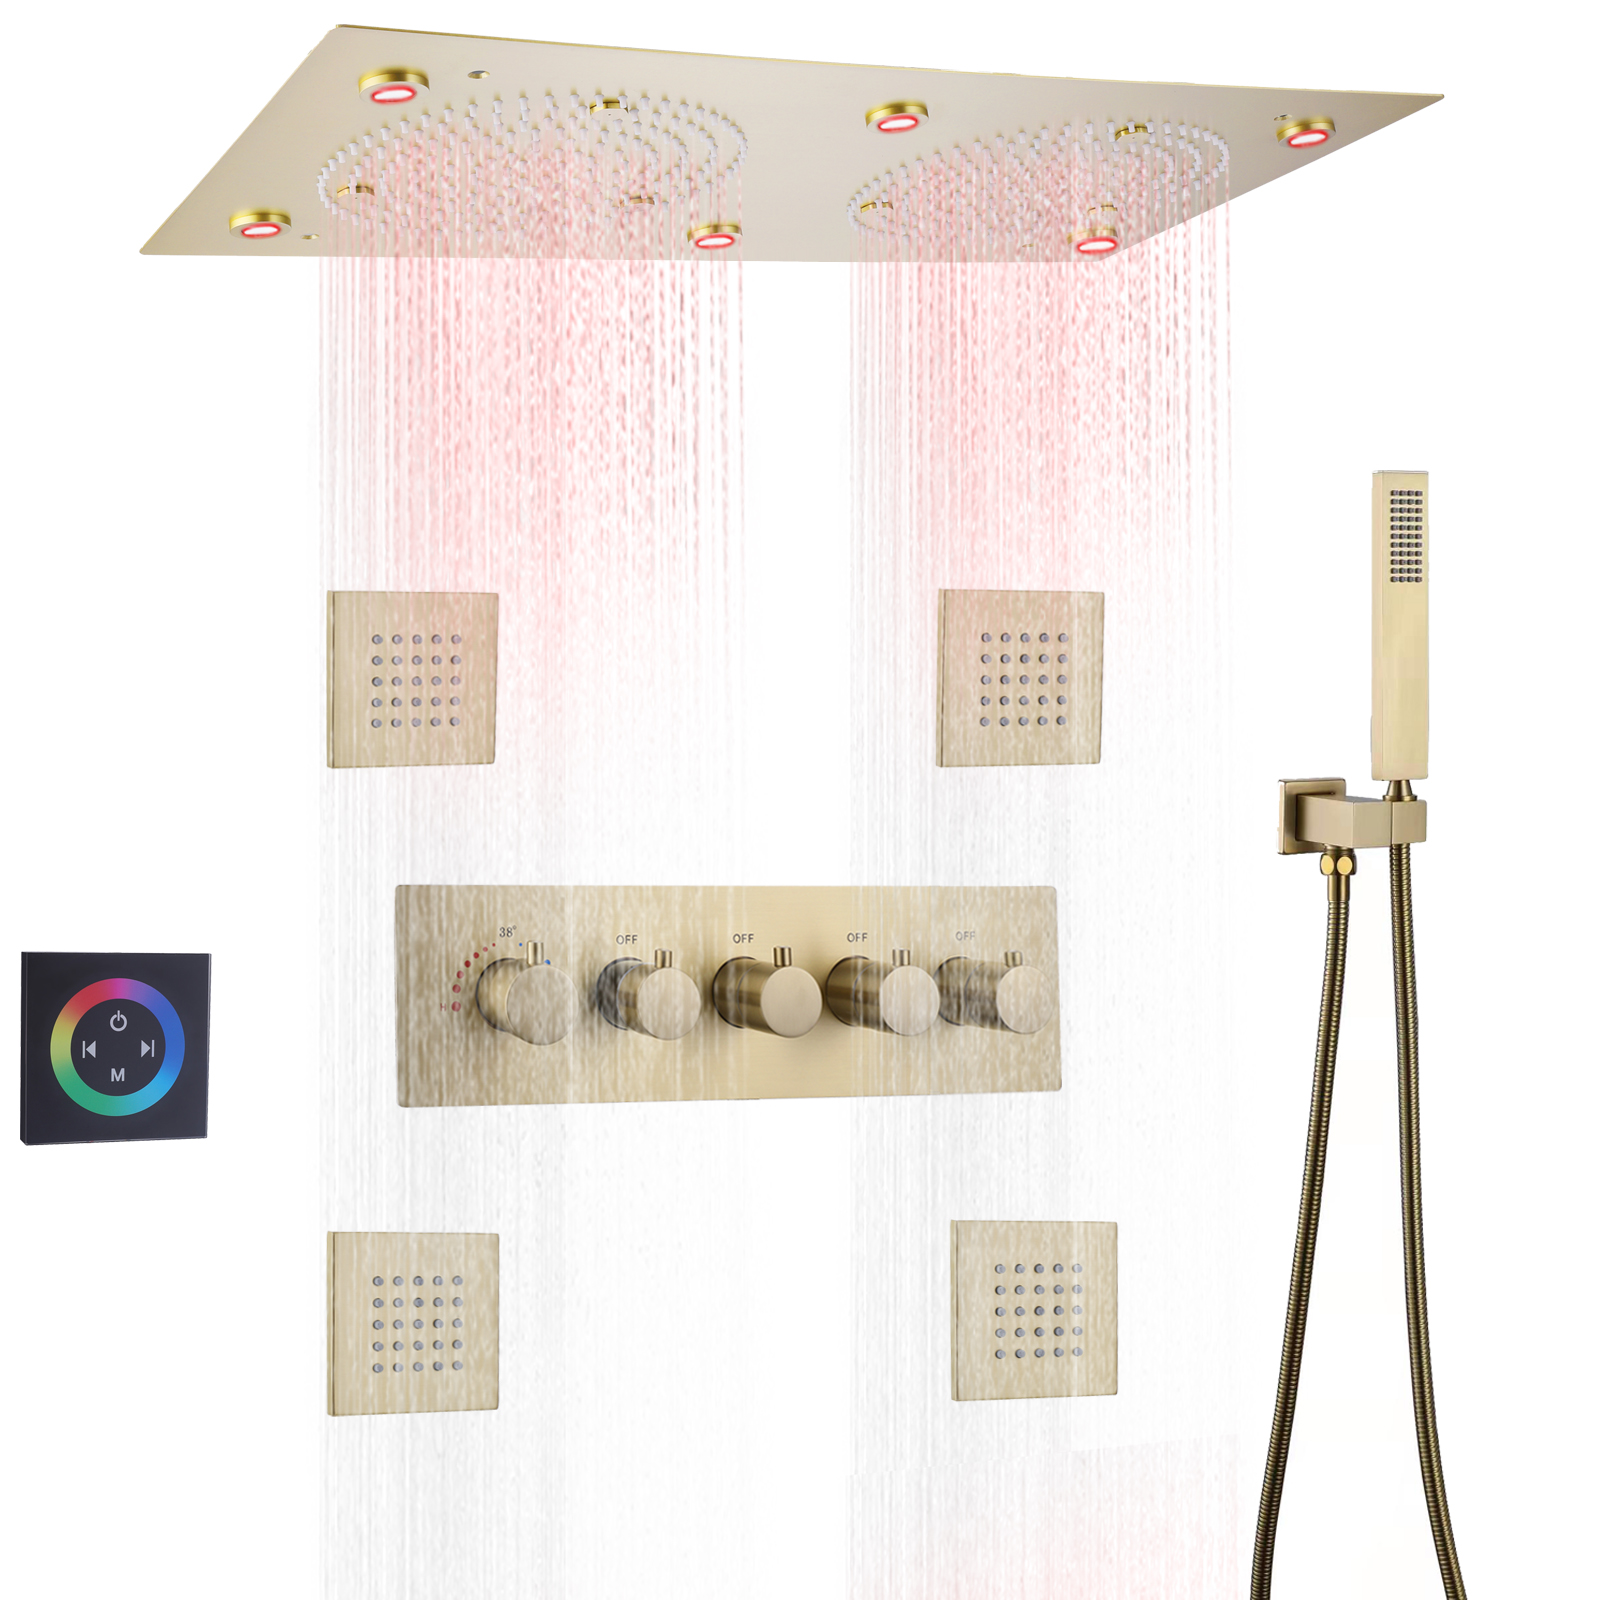 Sistema de ducha LED de oro cepillado, cabezal de masaje de ducha de lluvia termostático para baño